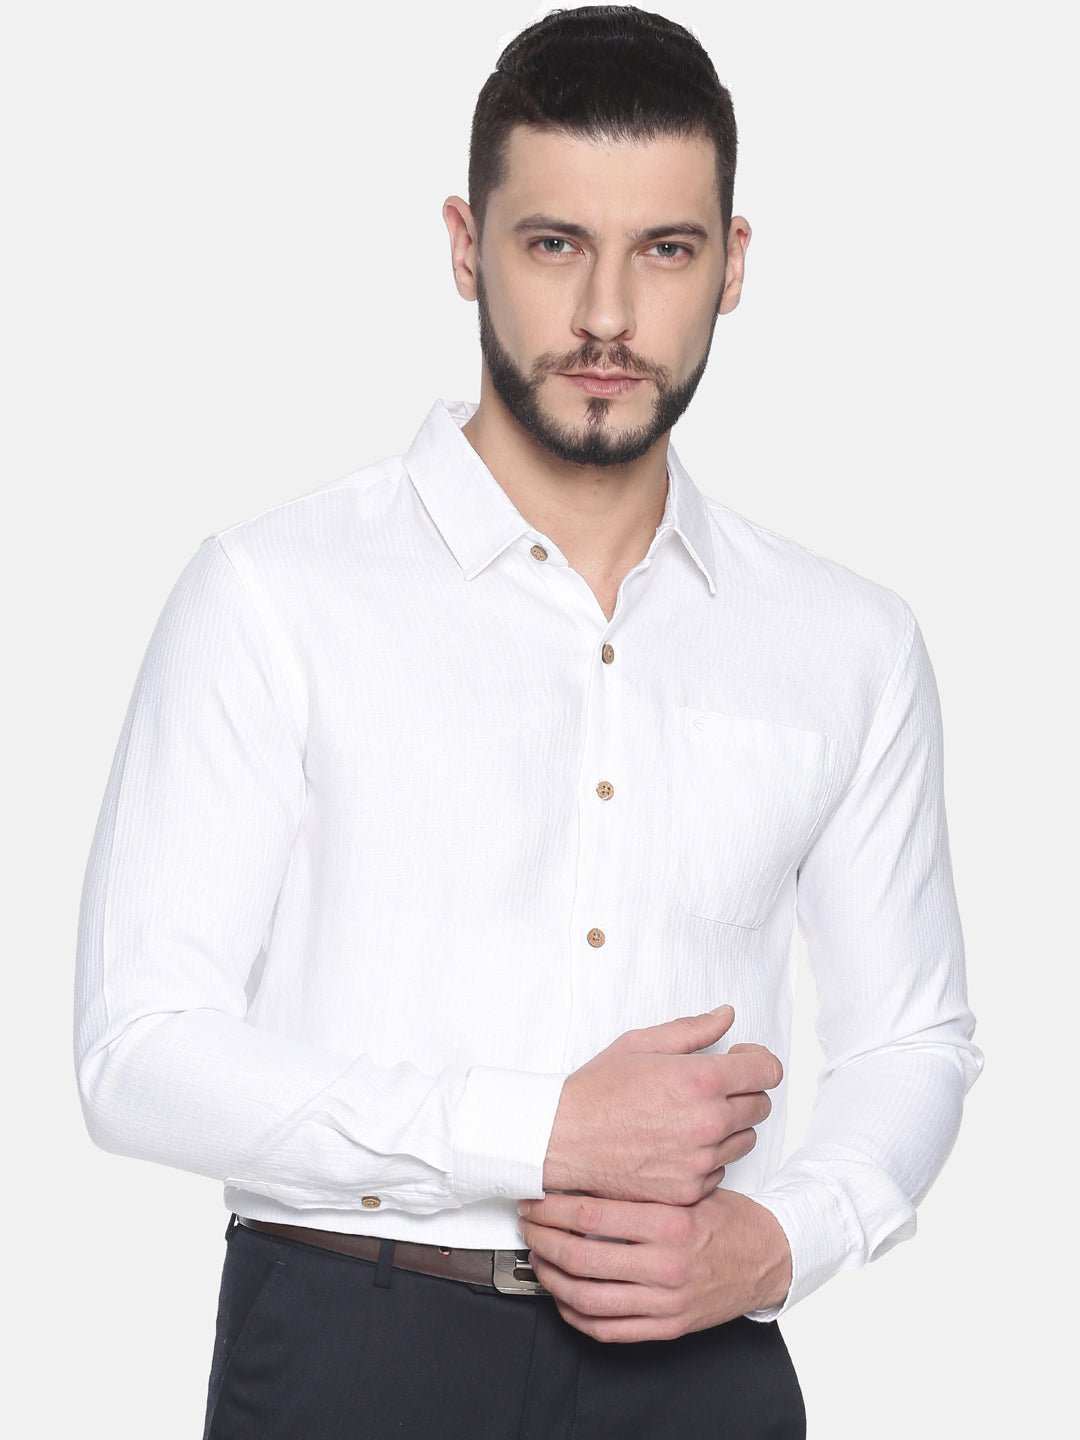 Ecentric Herringbone White Colour Slim Fit Hemp Formal Shirt - CBD Store India